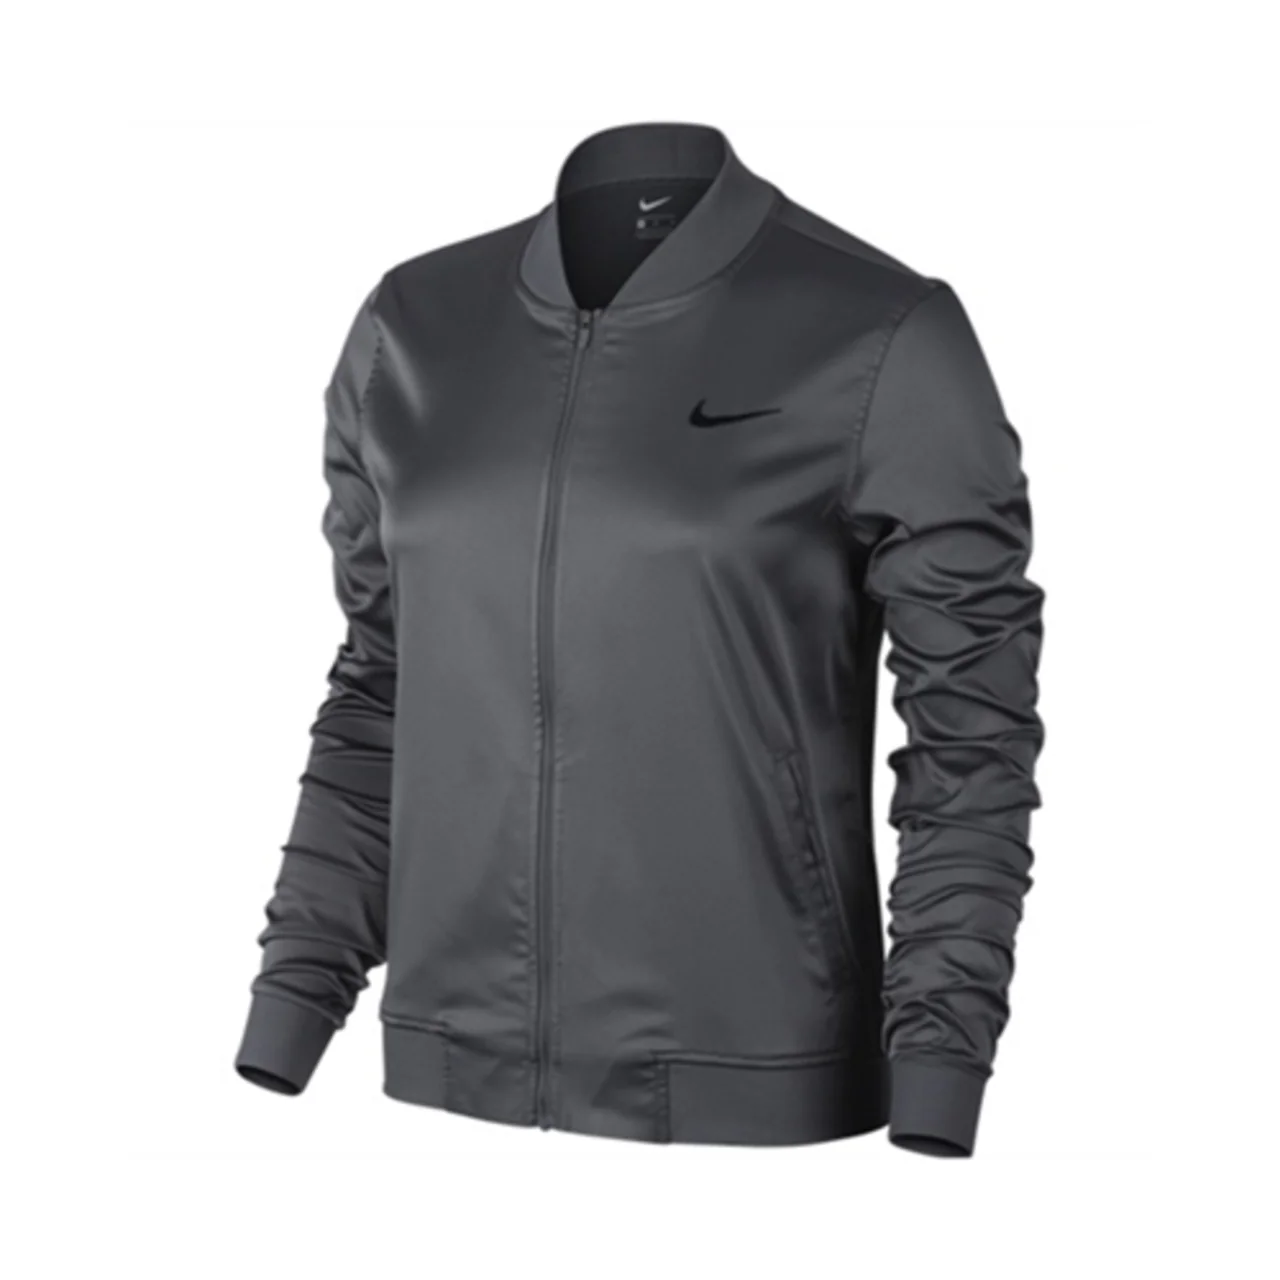 Nike Maria Sharapova Jacket Premier Size XS